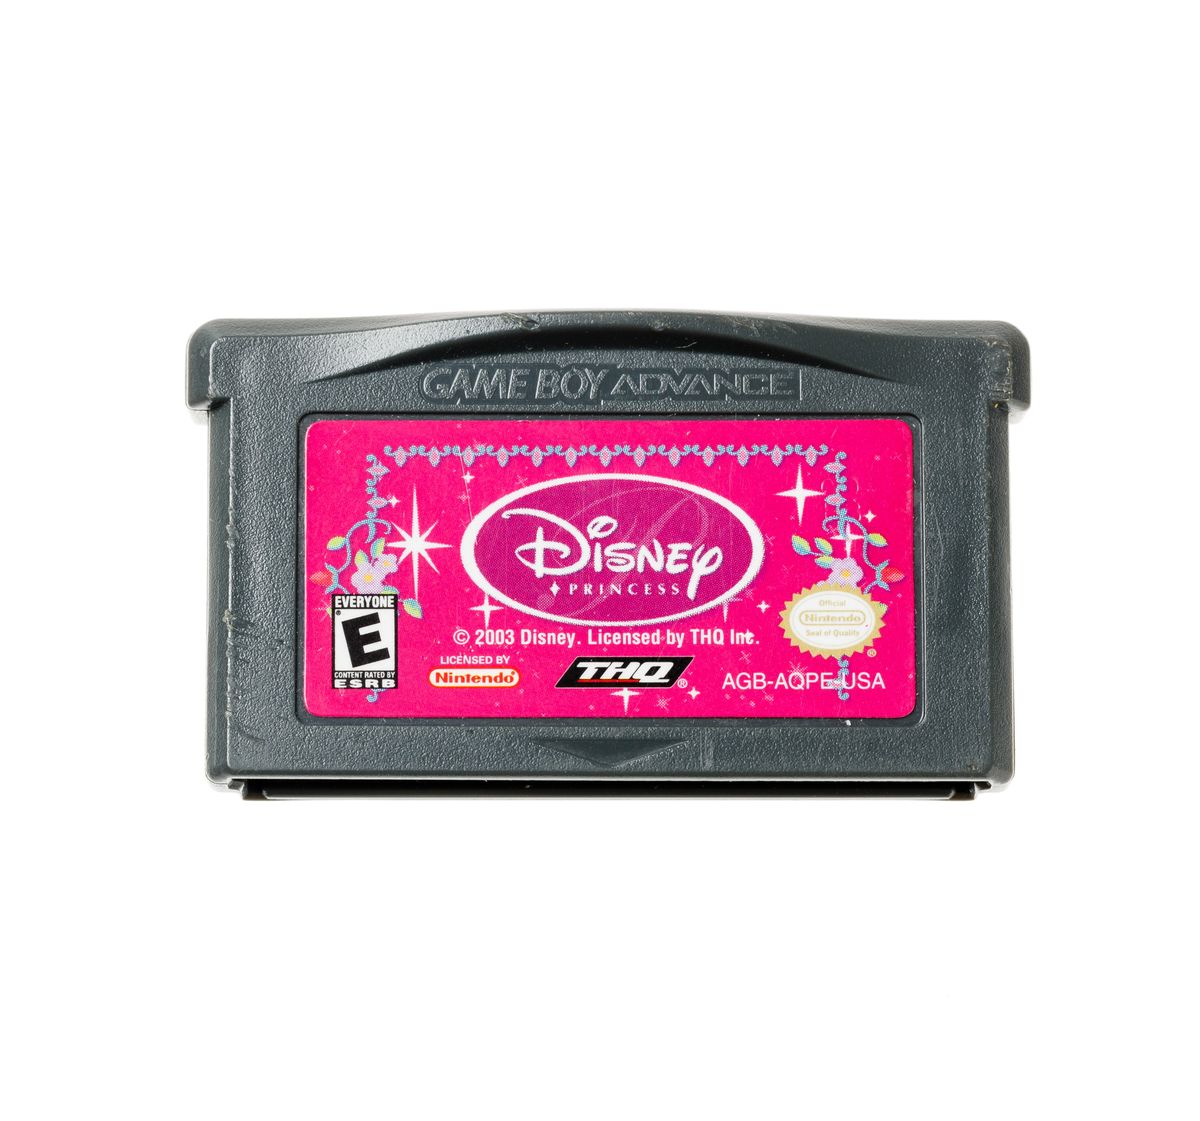 Disney Princess - Gameboy Advance Games